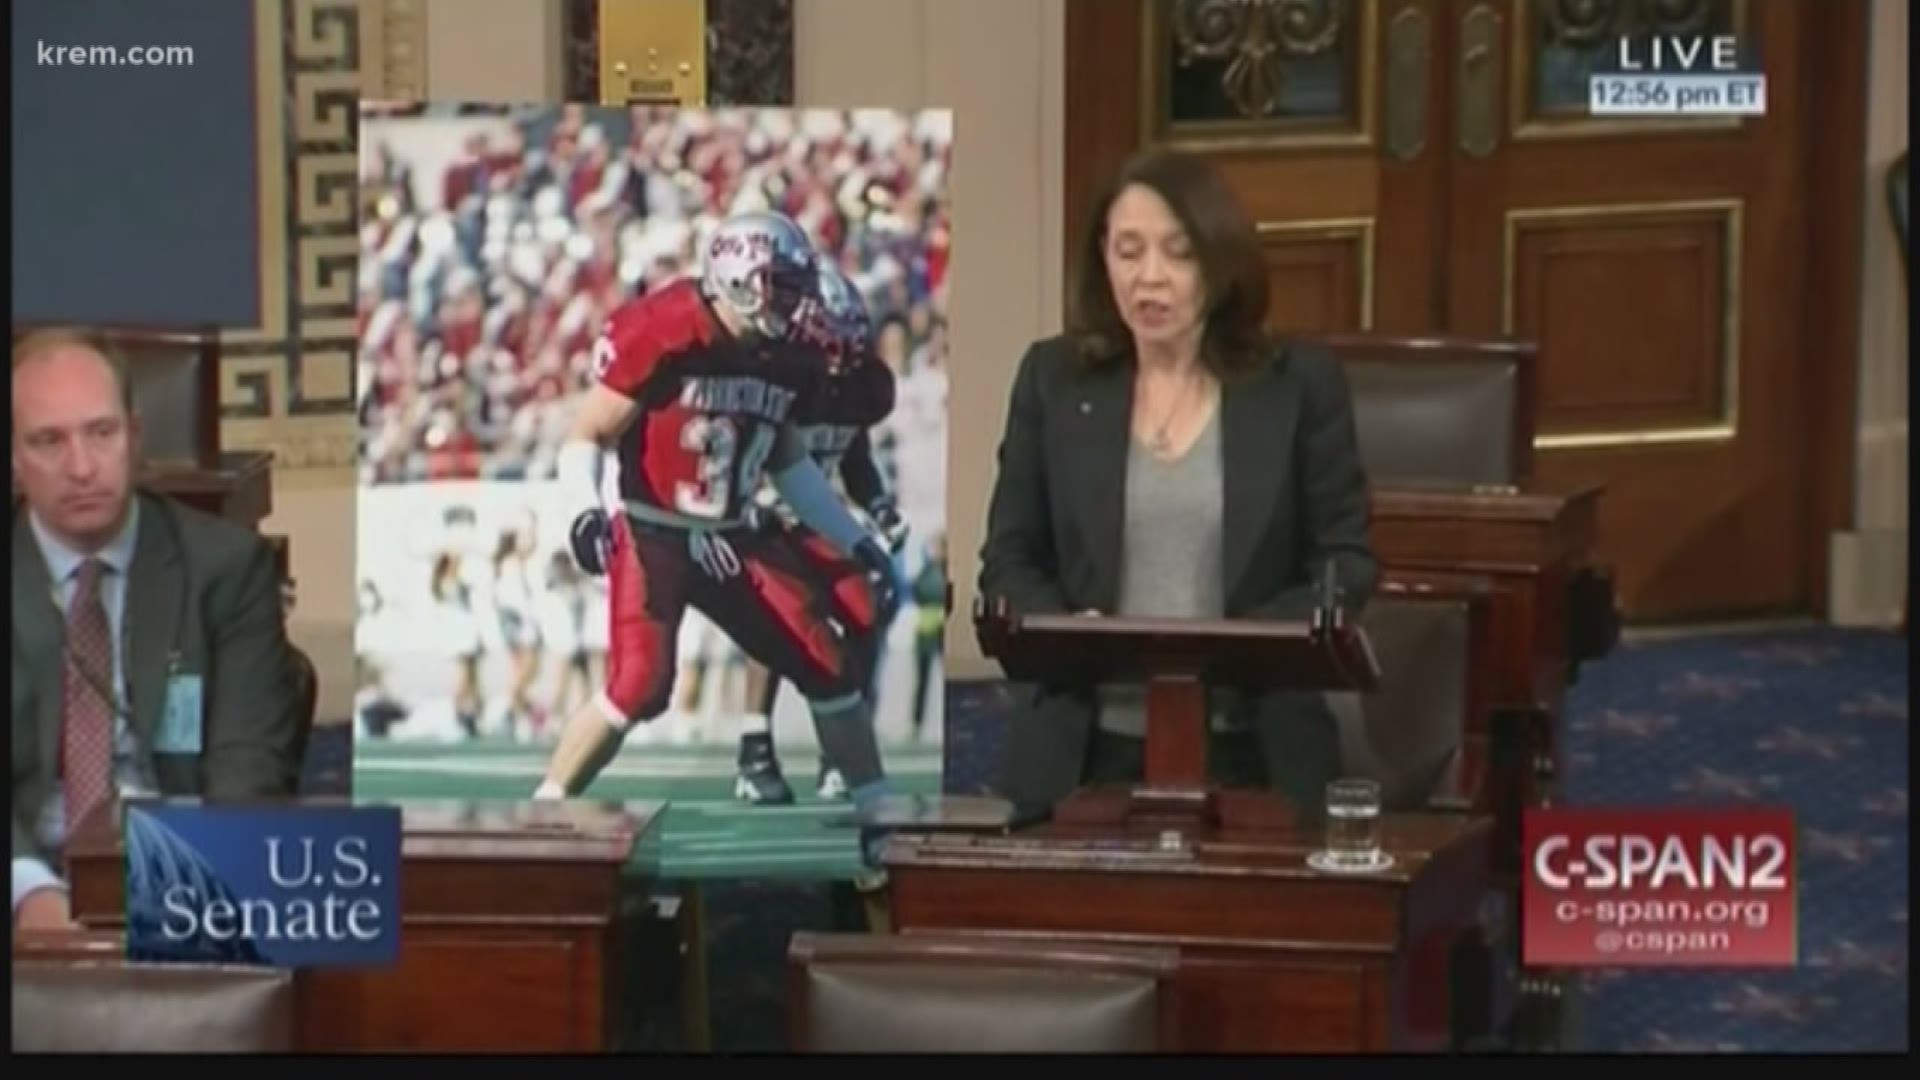 Earlier today -- Washington Senator Maria Cantwell spoke about Gleason on the senate floor.